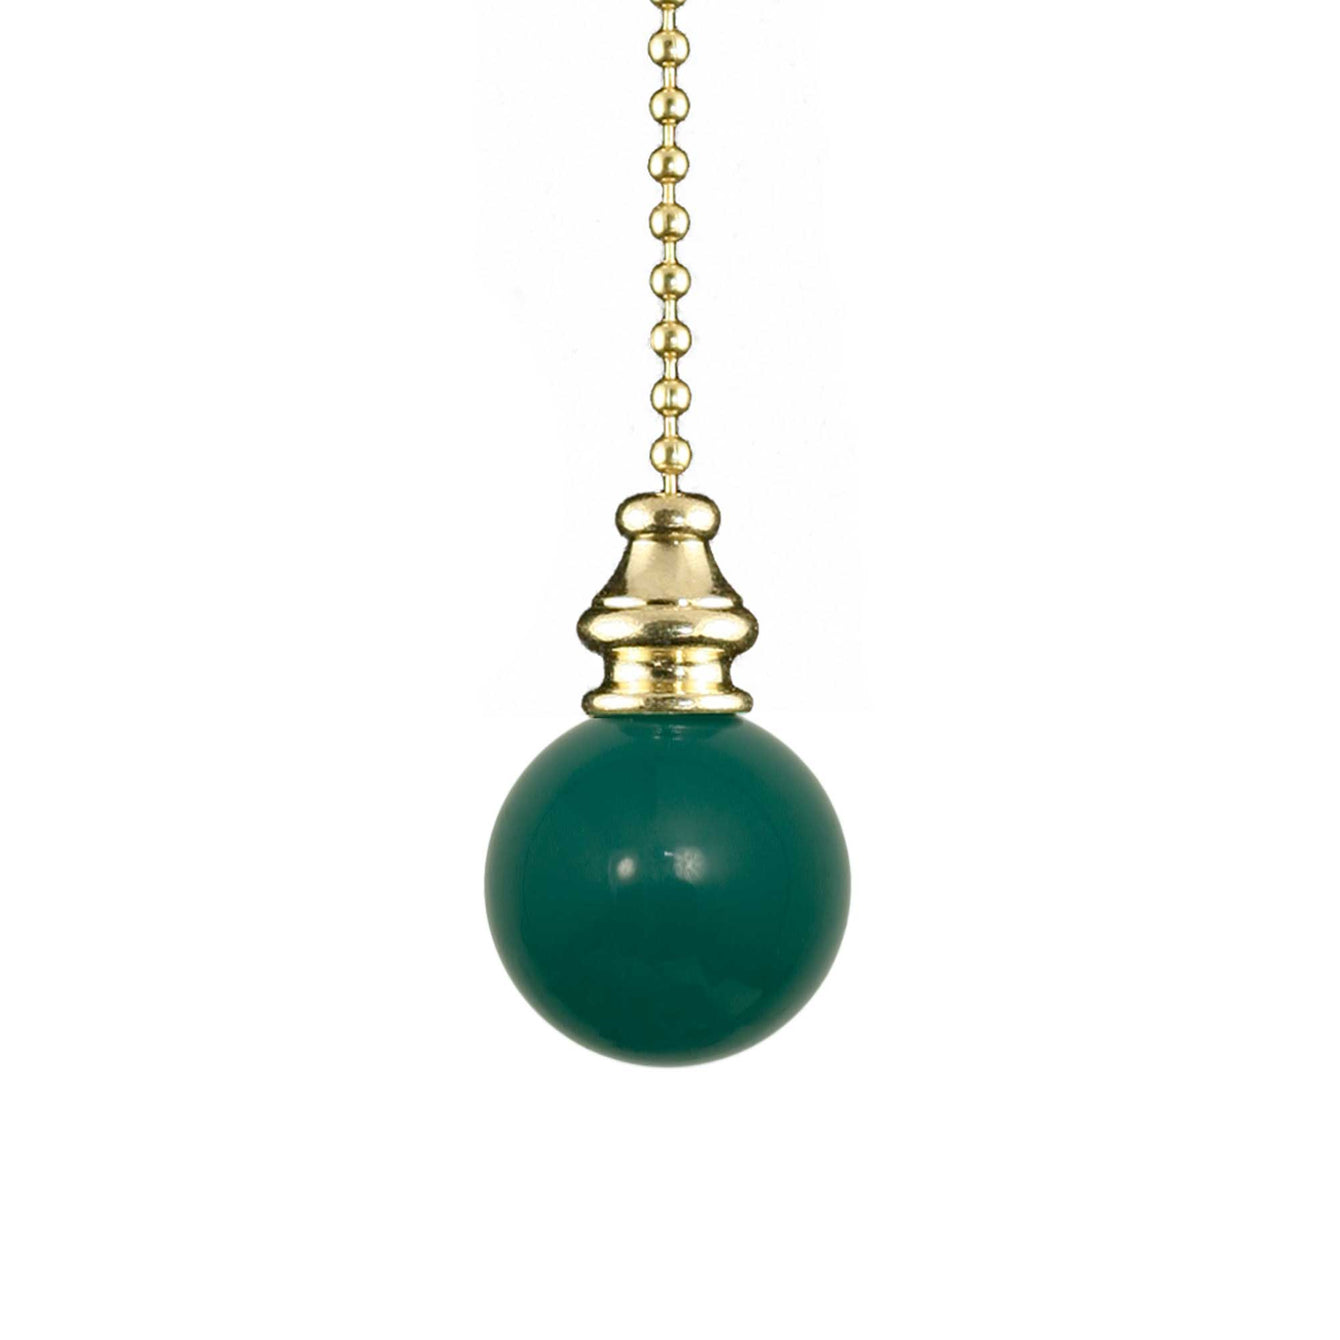 ElekTek Light Pull Chain Ball With 80cm Matching Chain 